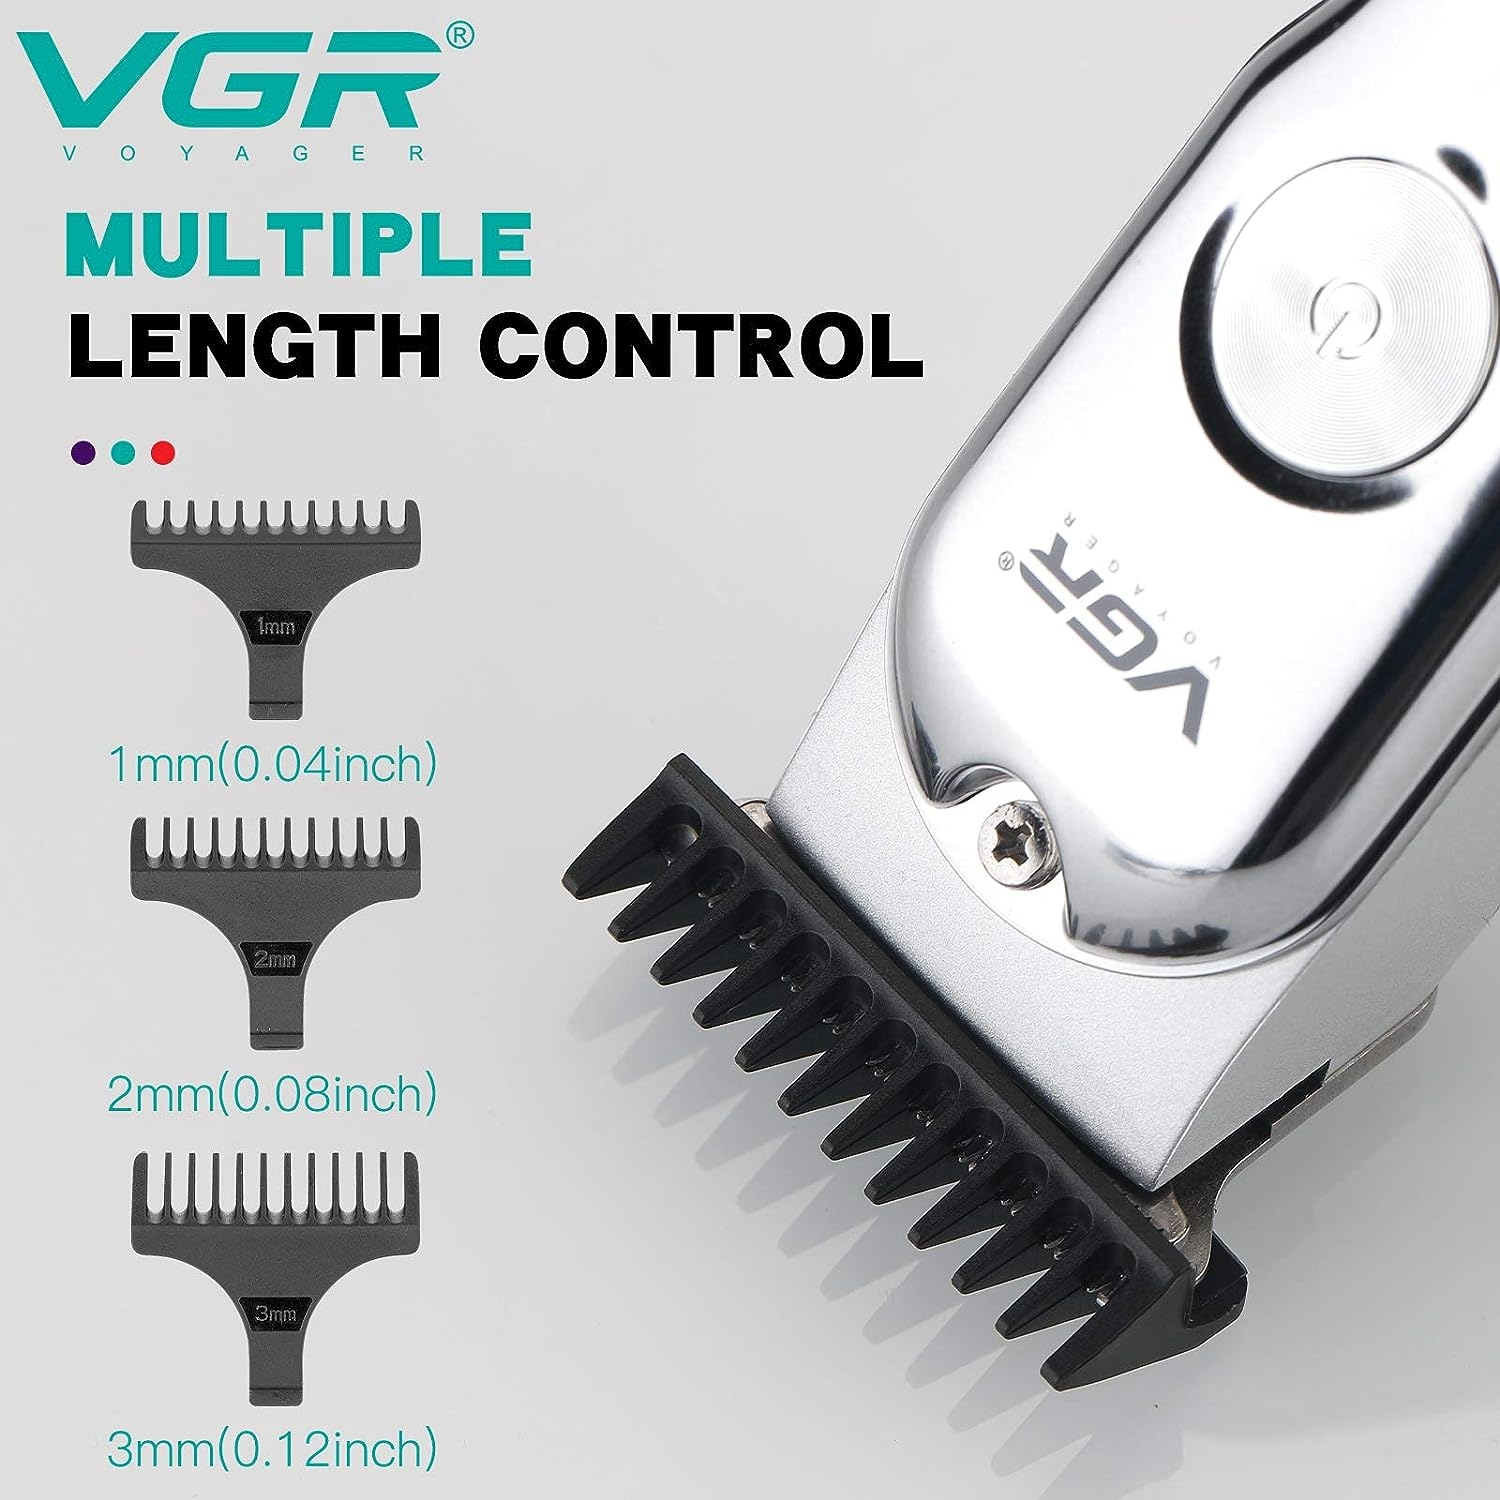 VGR V-071 Cordless Professional Hair Clipper